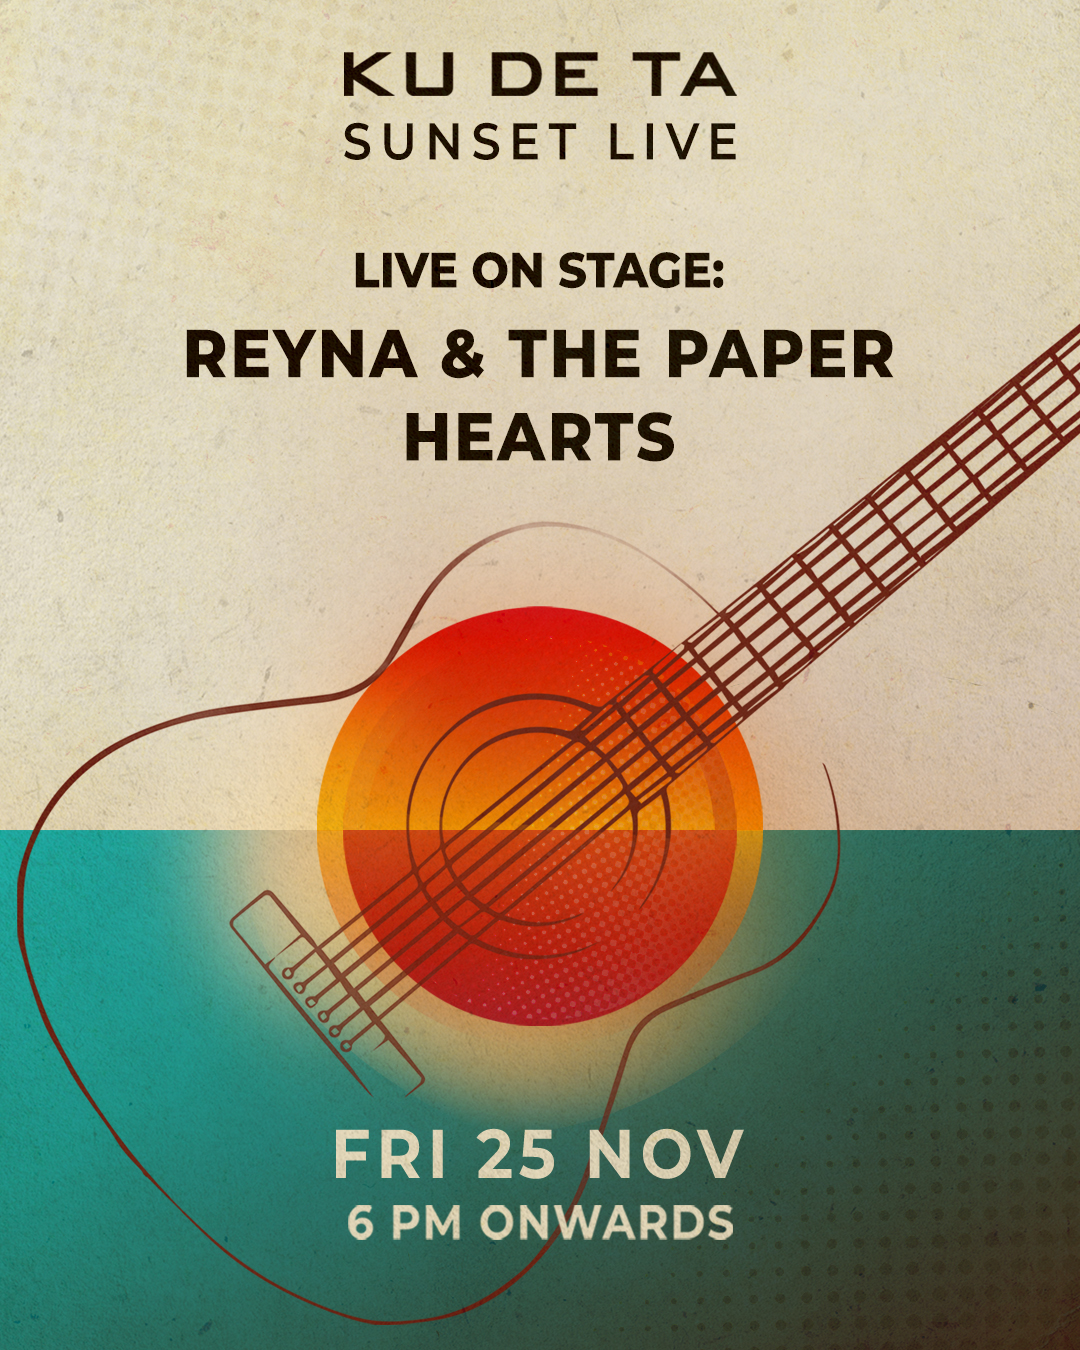 SUNSET LIVE AT KU DE TA WITH REYNA & THE PAPER HEARTS – FRIDAY 25TH NOVEMBER thumbnail image